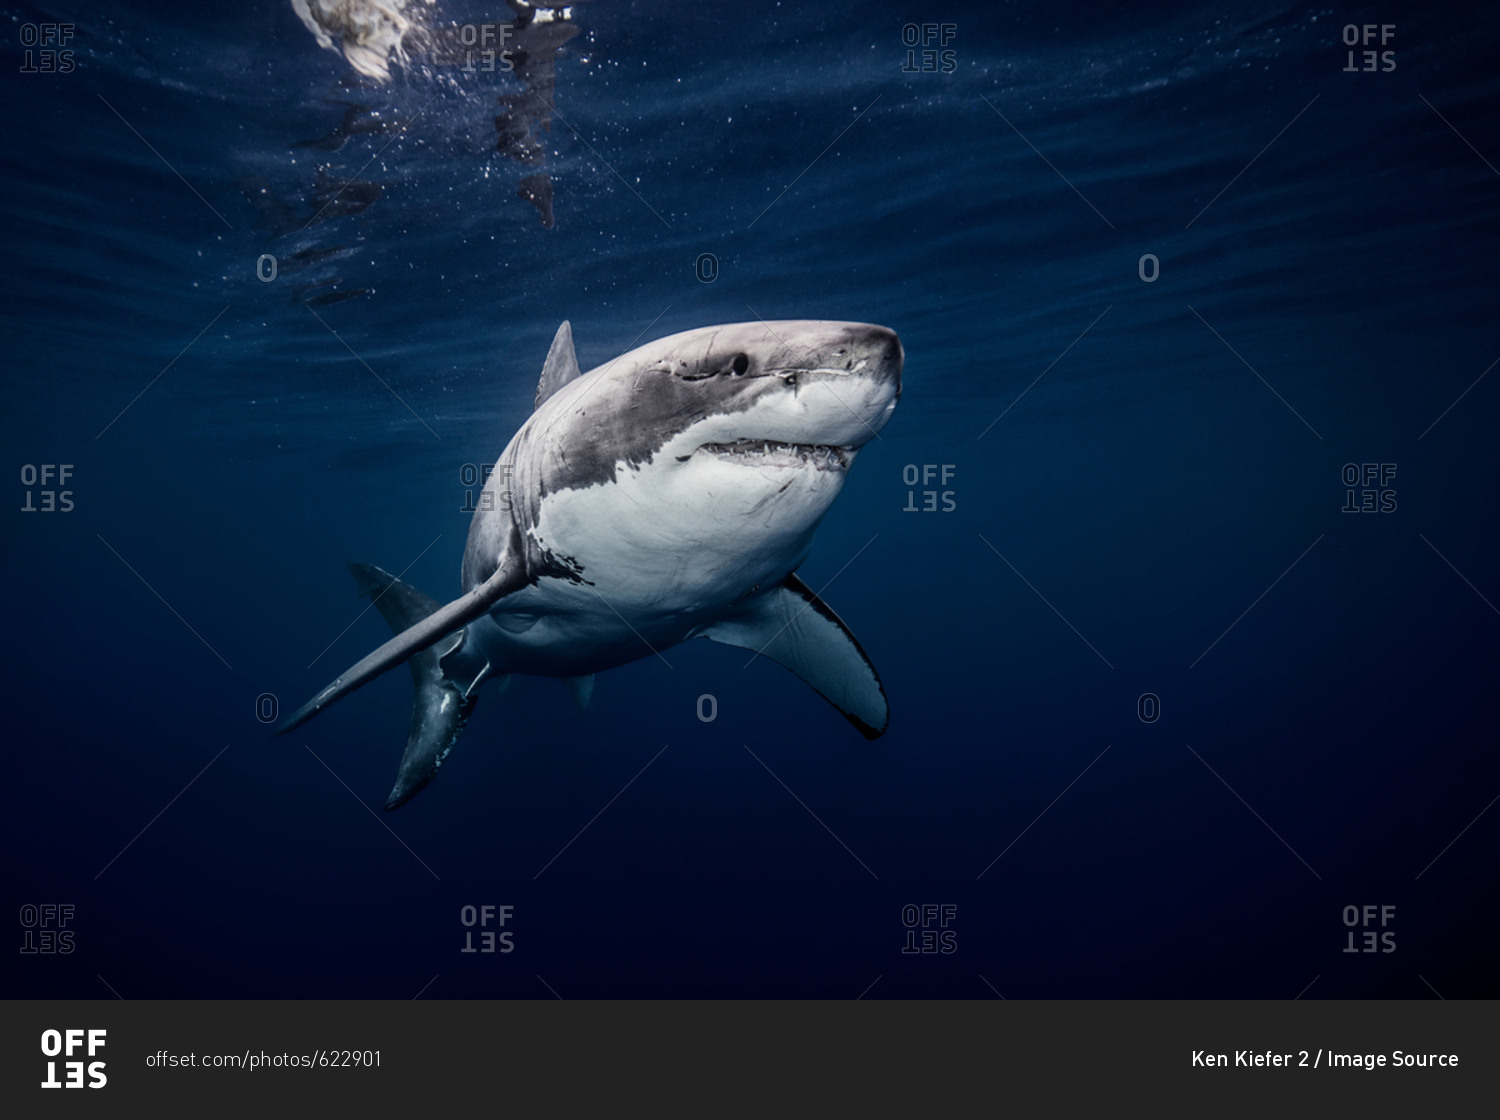 Underwater view of white shark swimming in blue sea, Sinaloa, Mexico